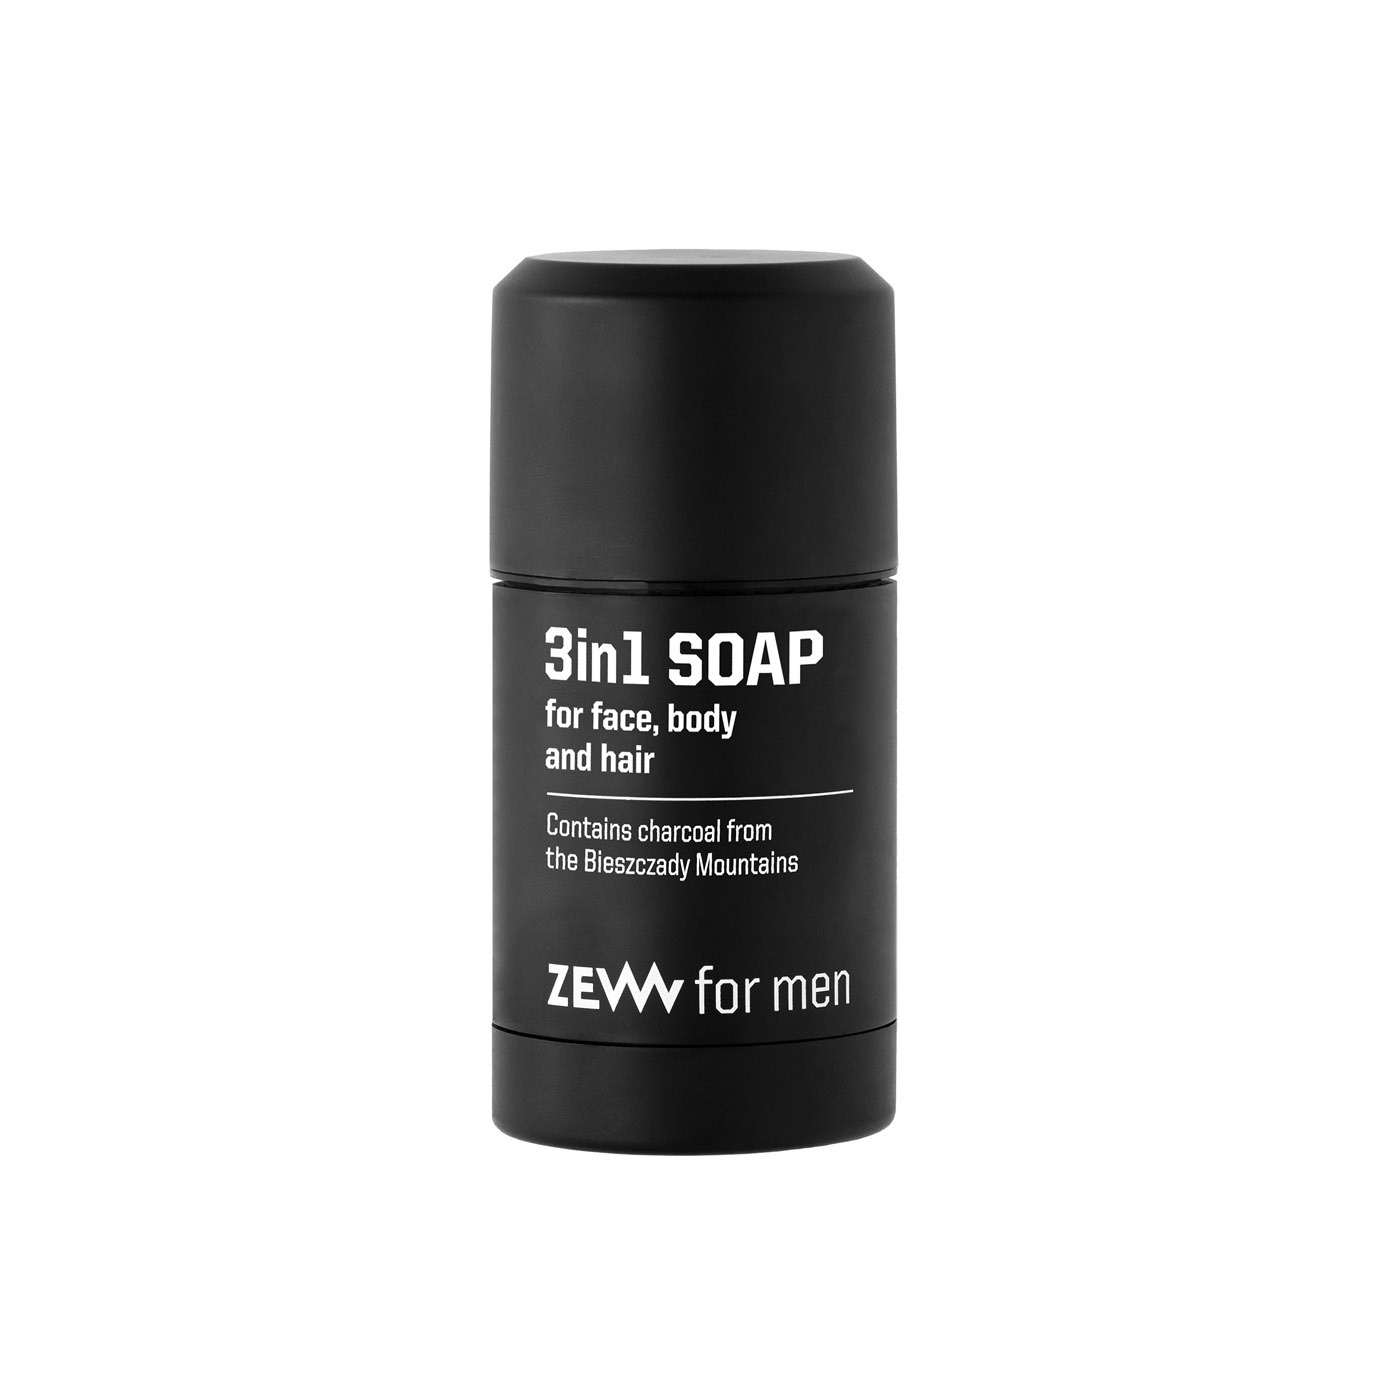 ZEW for men 3 in 1 soap: body, face and hair - mydlo 3v1 na telo, tvár a vlasy s dreveným uhlím, 85 ml + vrecko M